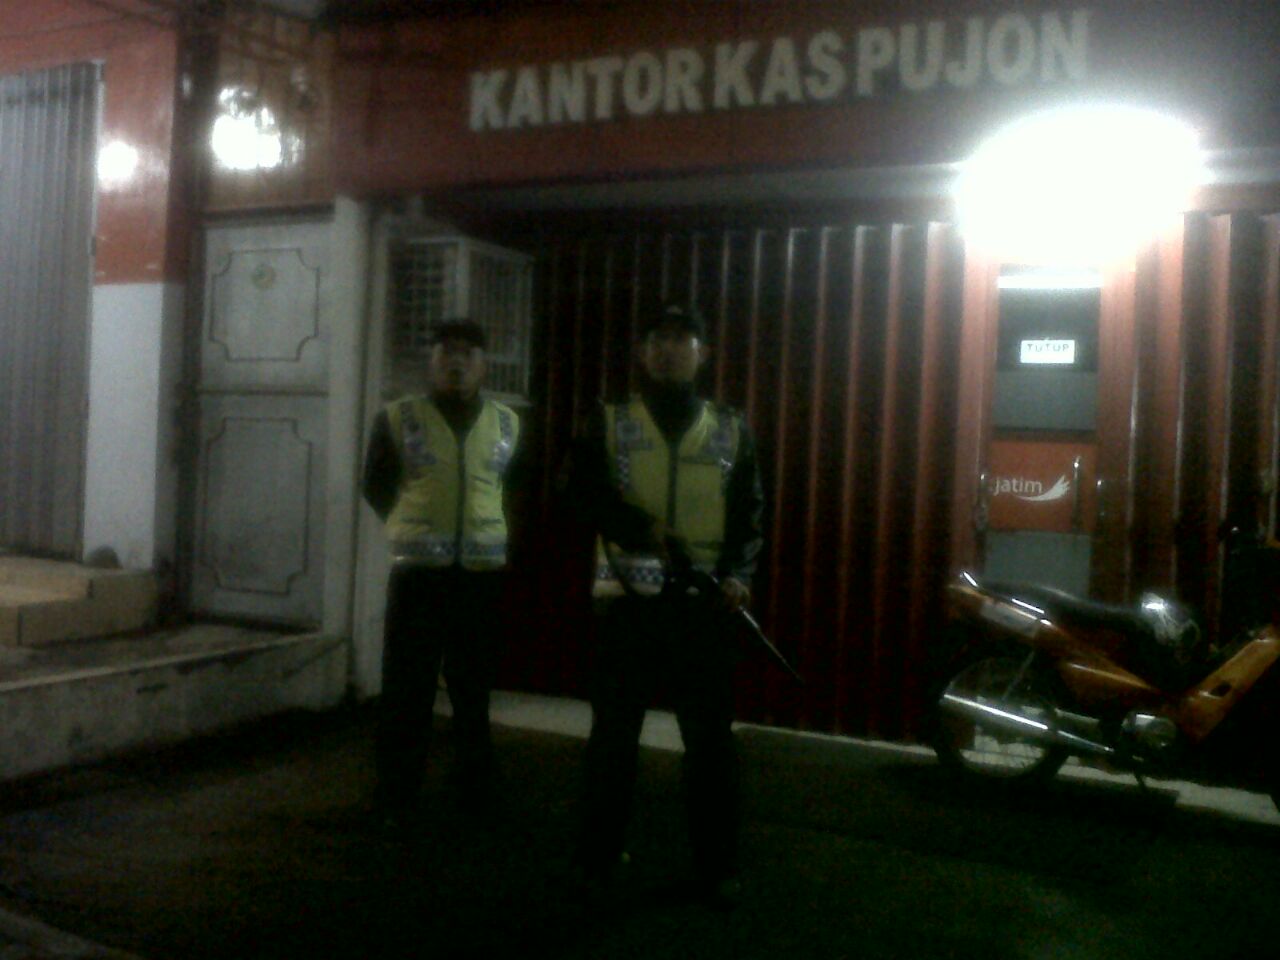 Unit Patroli Anggota Polsek Pujon Polres Batu Lakukan Patroli Malam Ciptakan Situasi Aman Kondusif